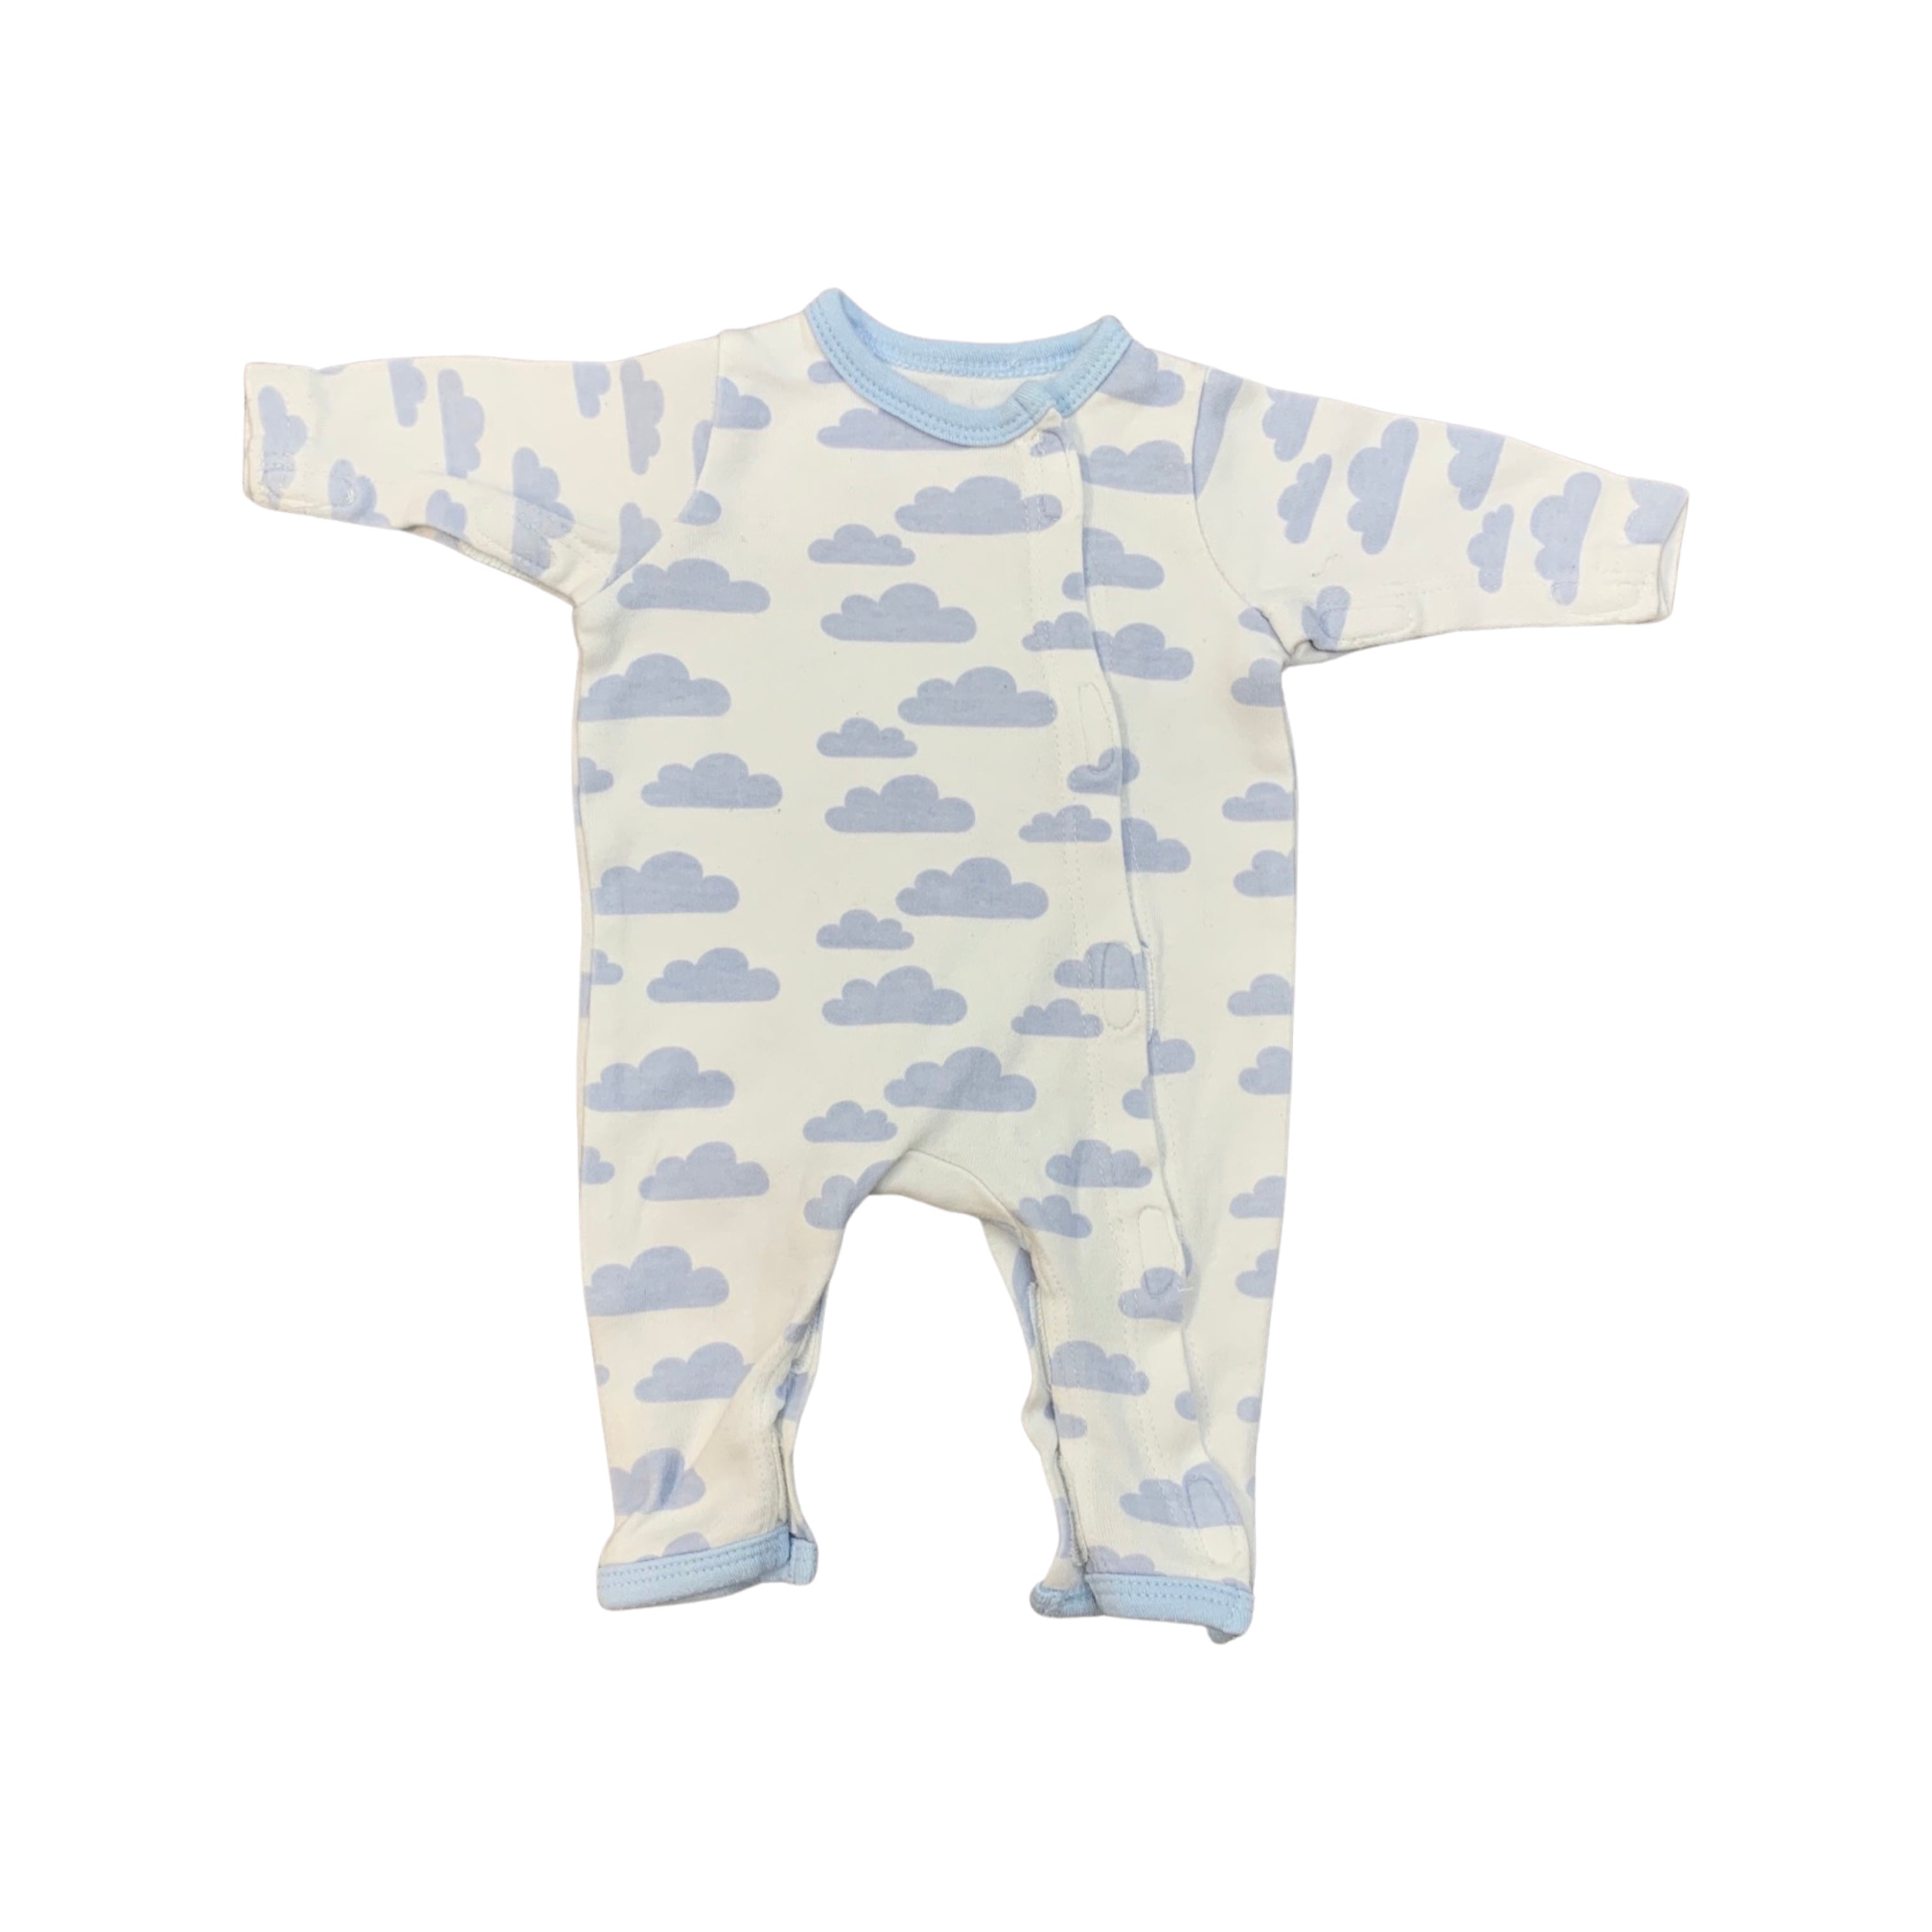 Unknown Brand Velcro Sleepsuit Premature Baby Boy